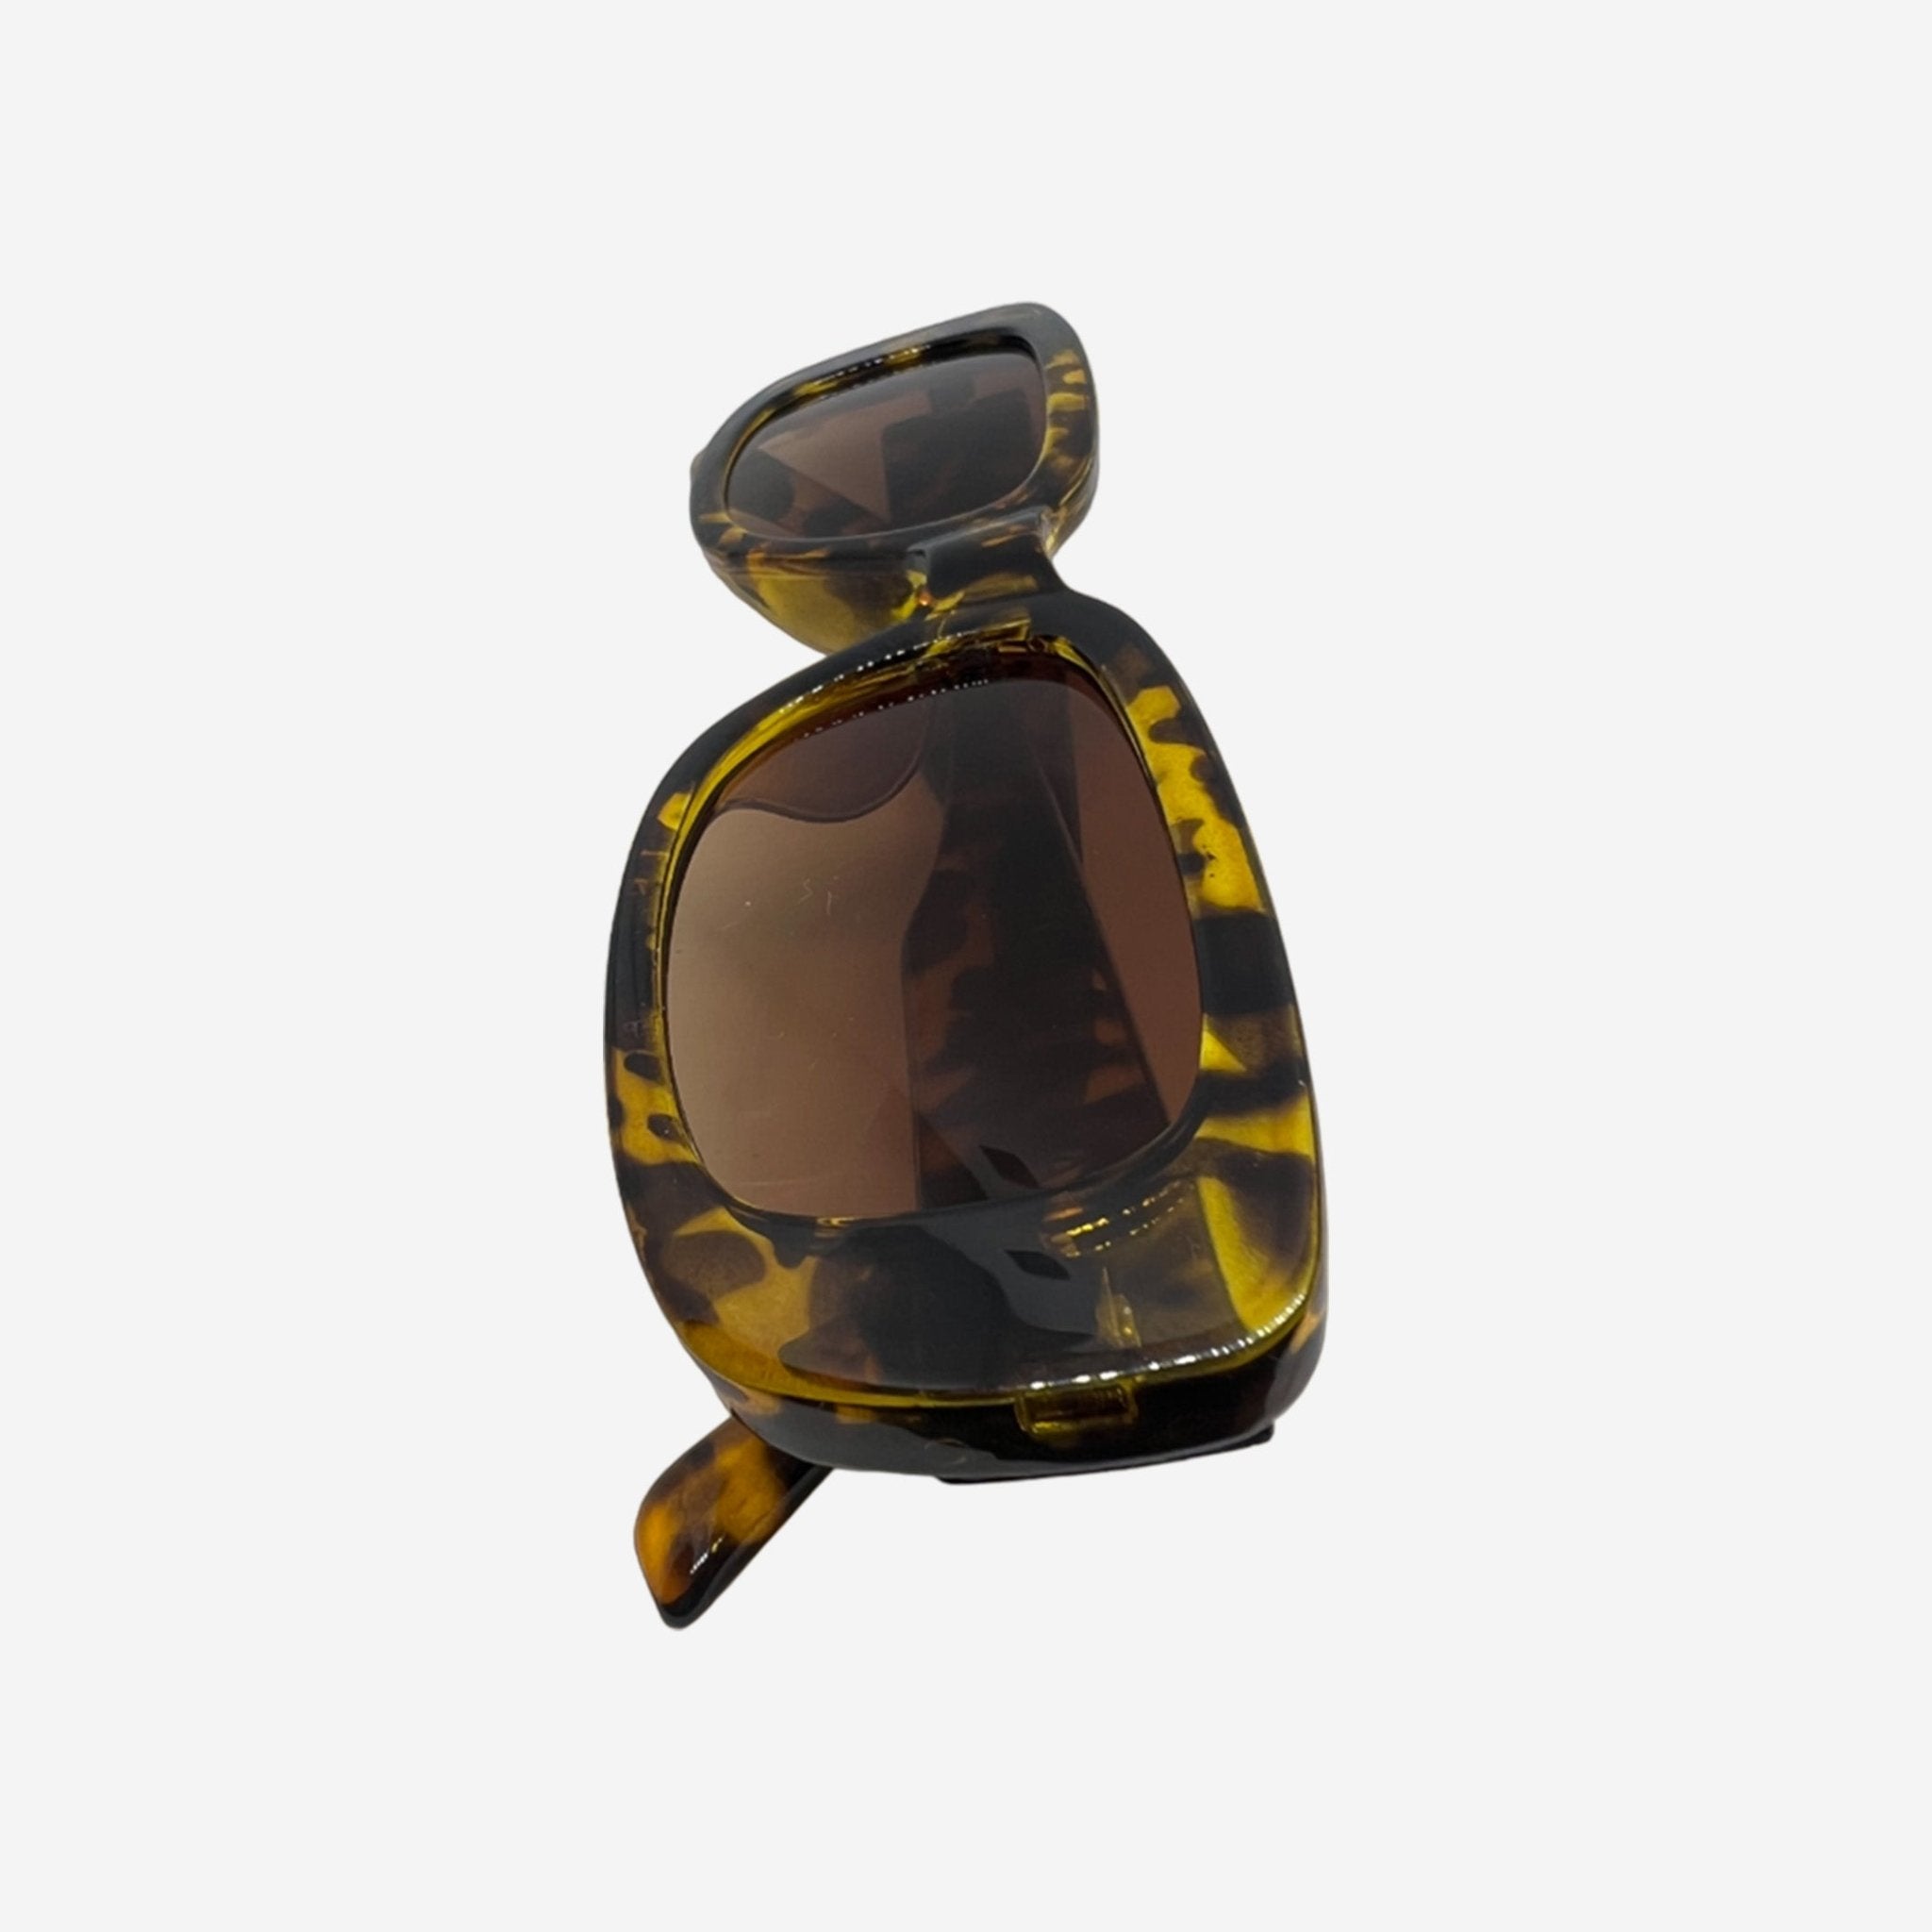 For hangover sunglasses turtle - sameoldmistakes